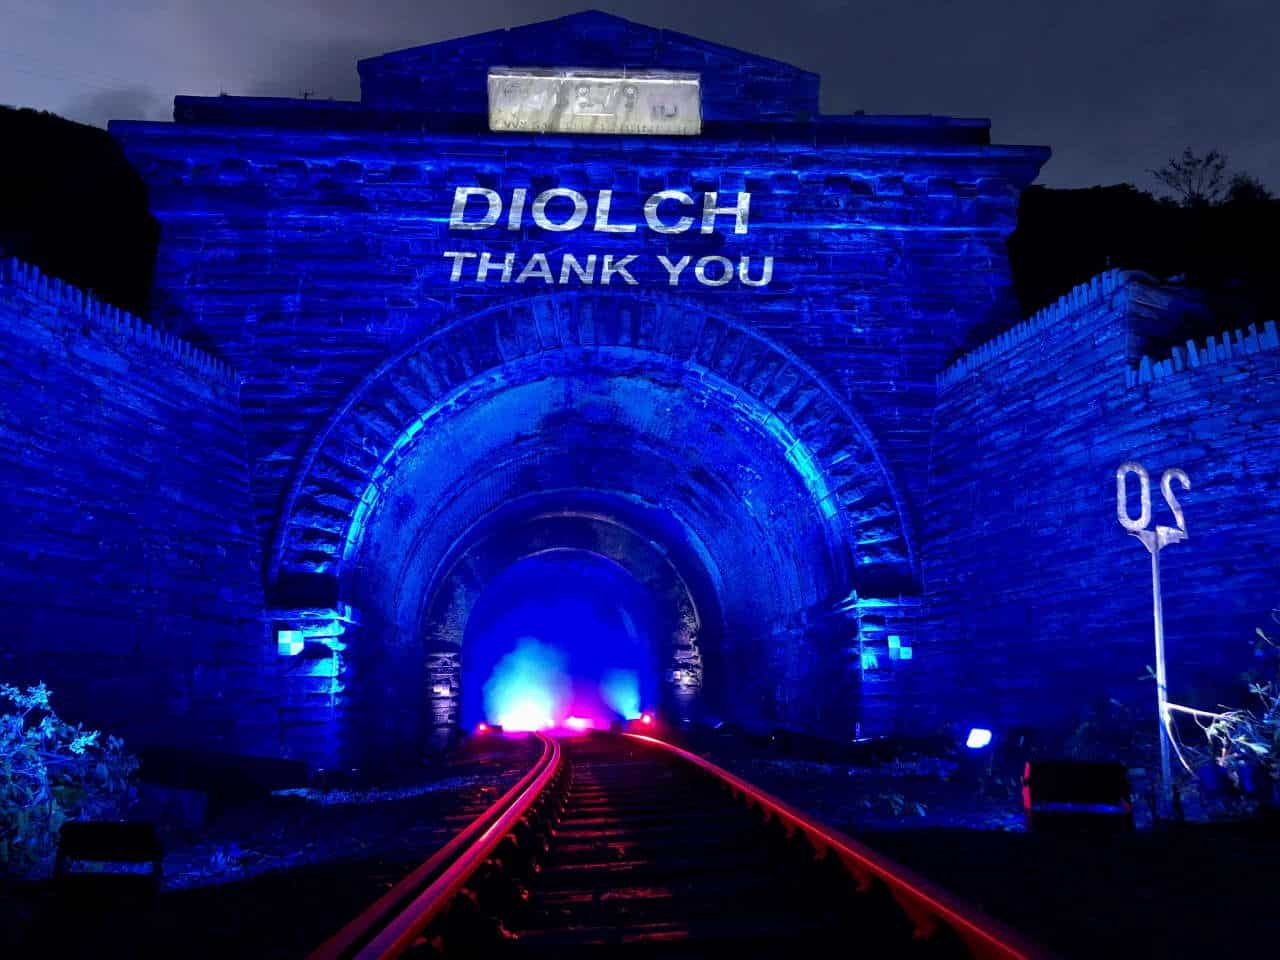 Blaenau Ffestiniog railway tunnel lit up to thank NHS workers